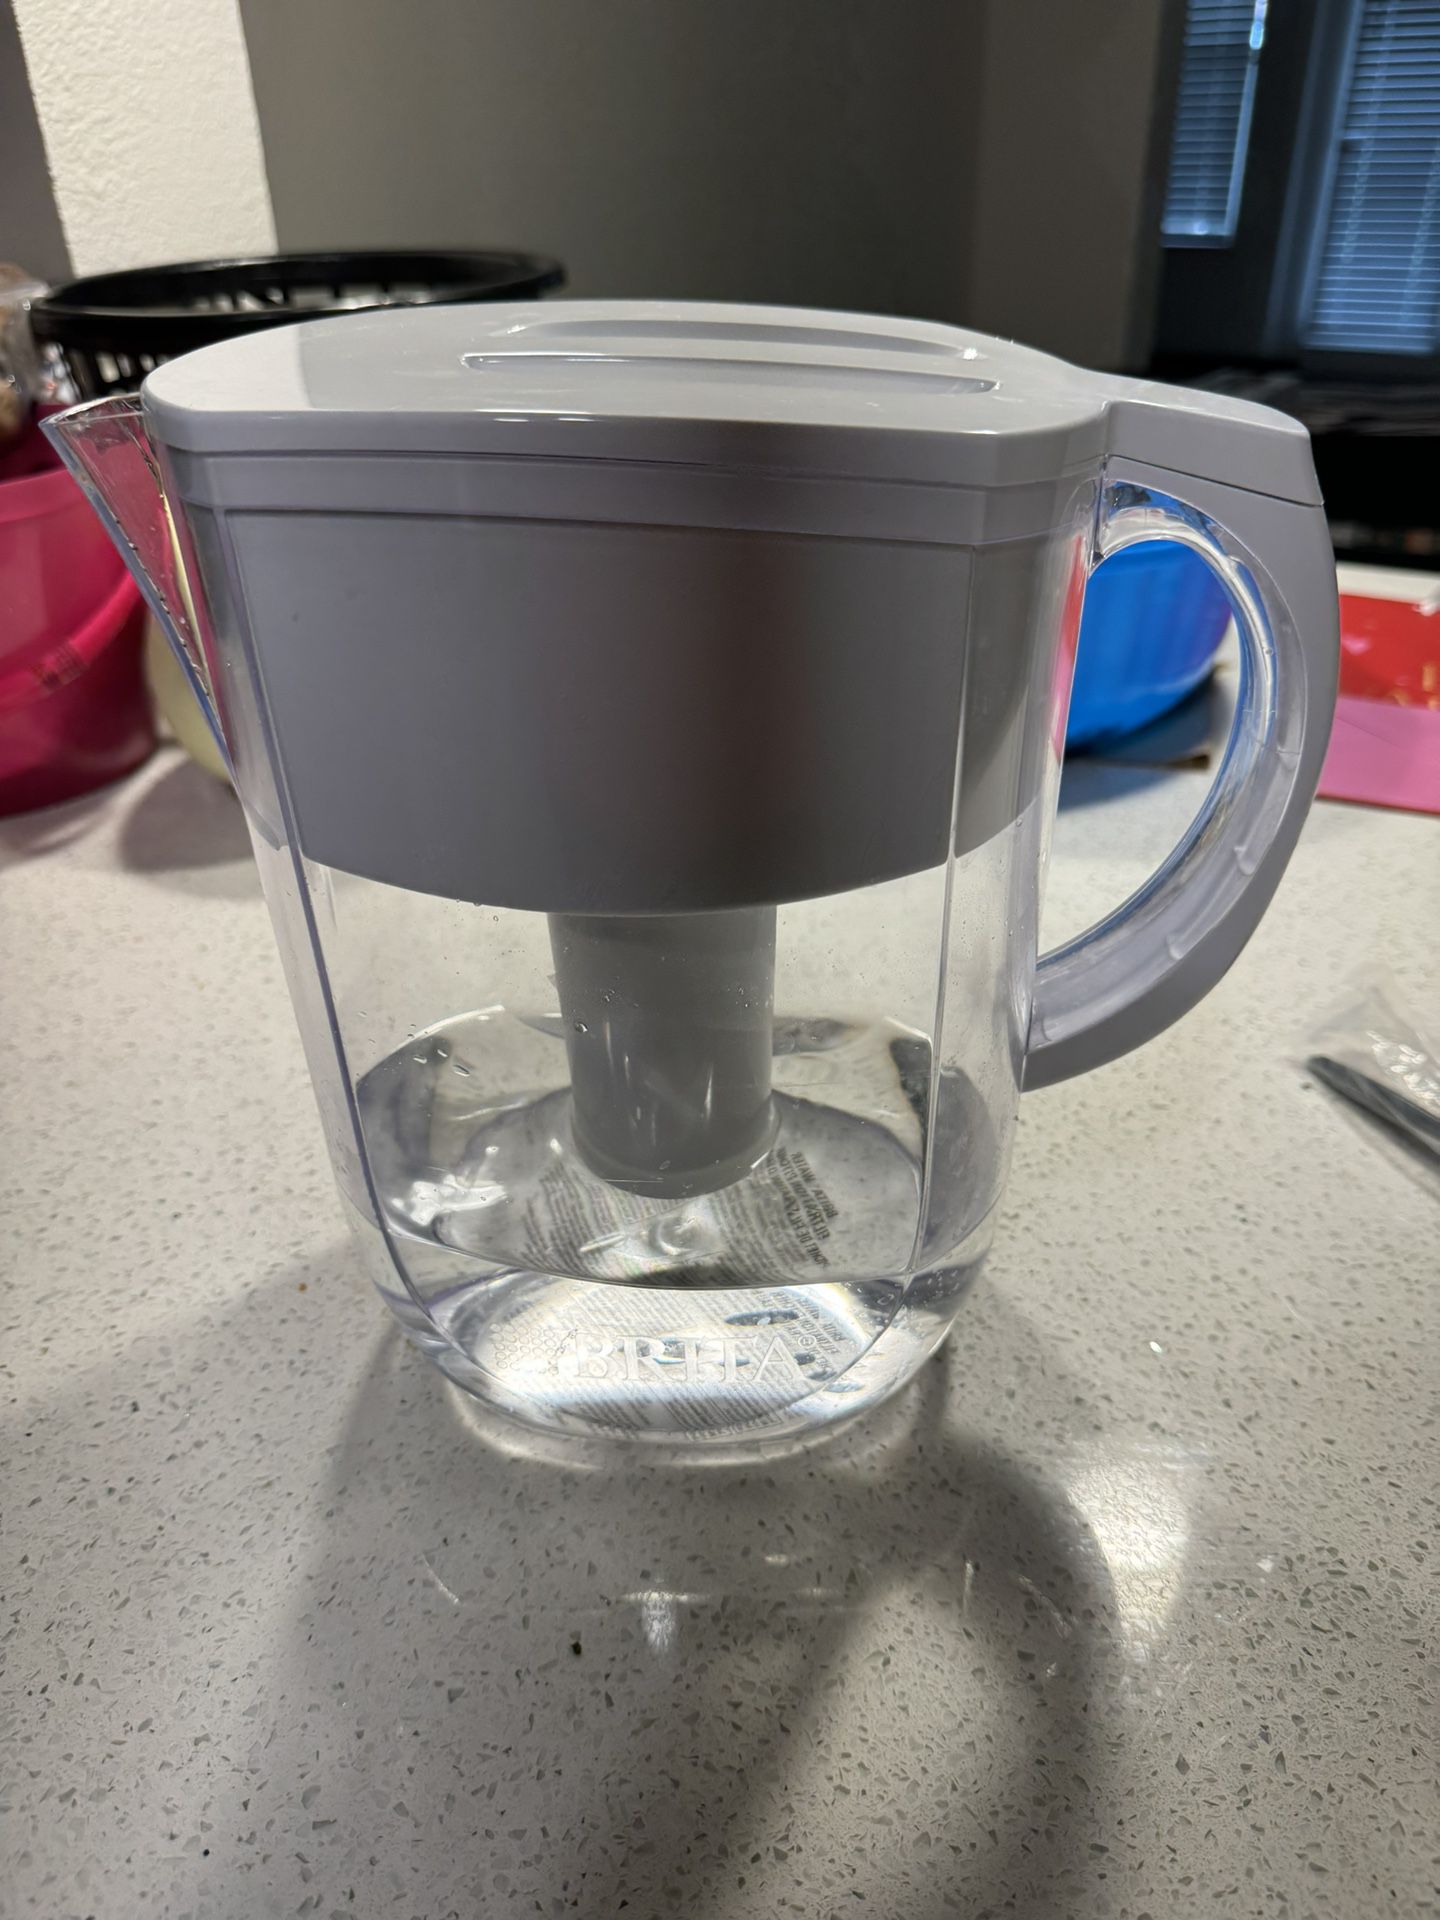 6 Cup Brita Water Filter / Purifier